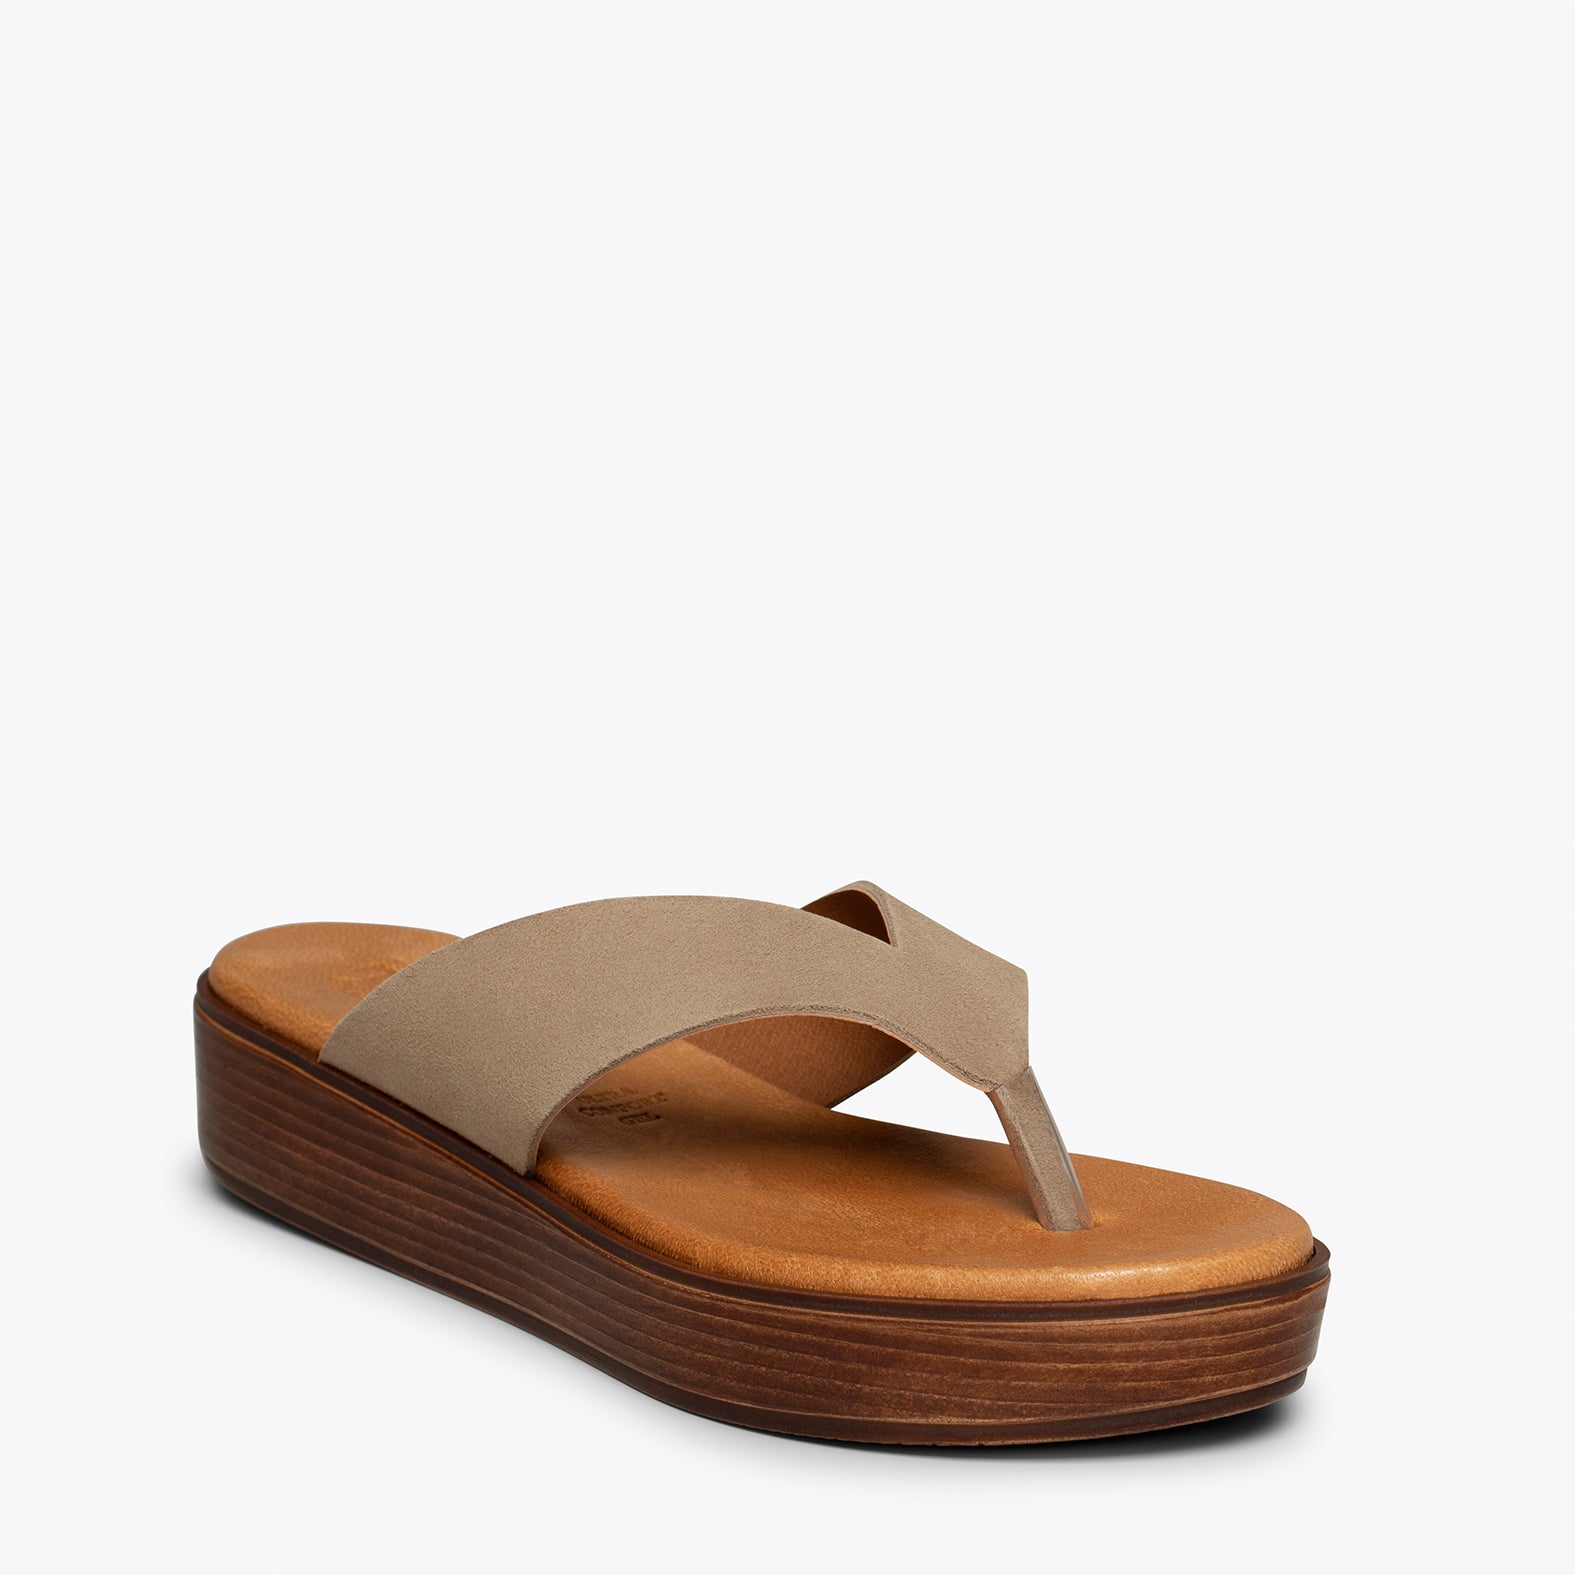 BASIC – TAUPE leather flip flops